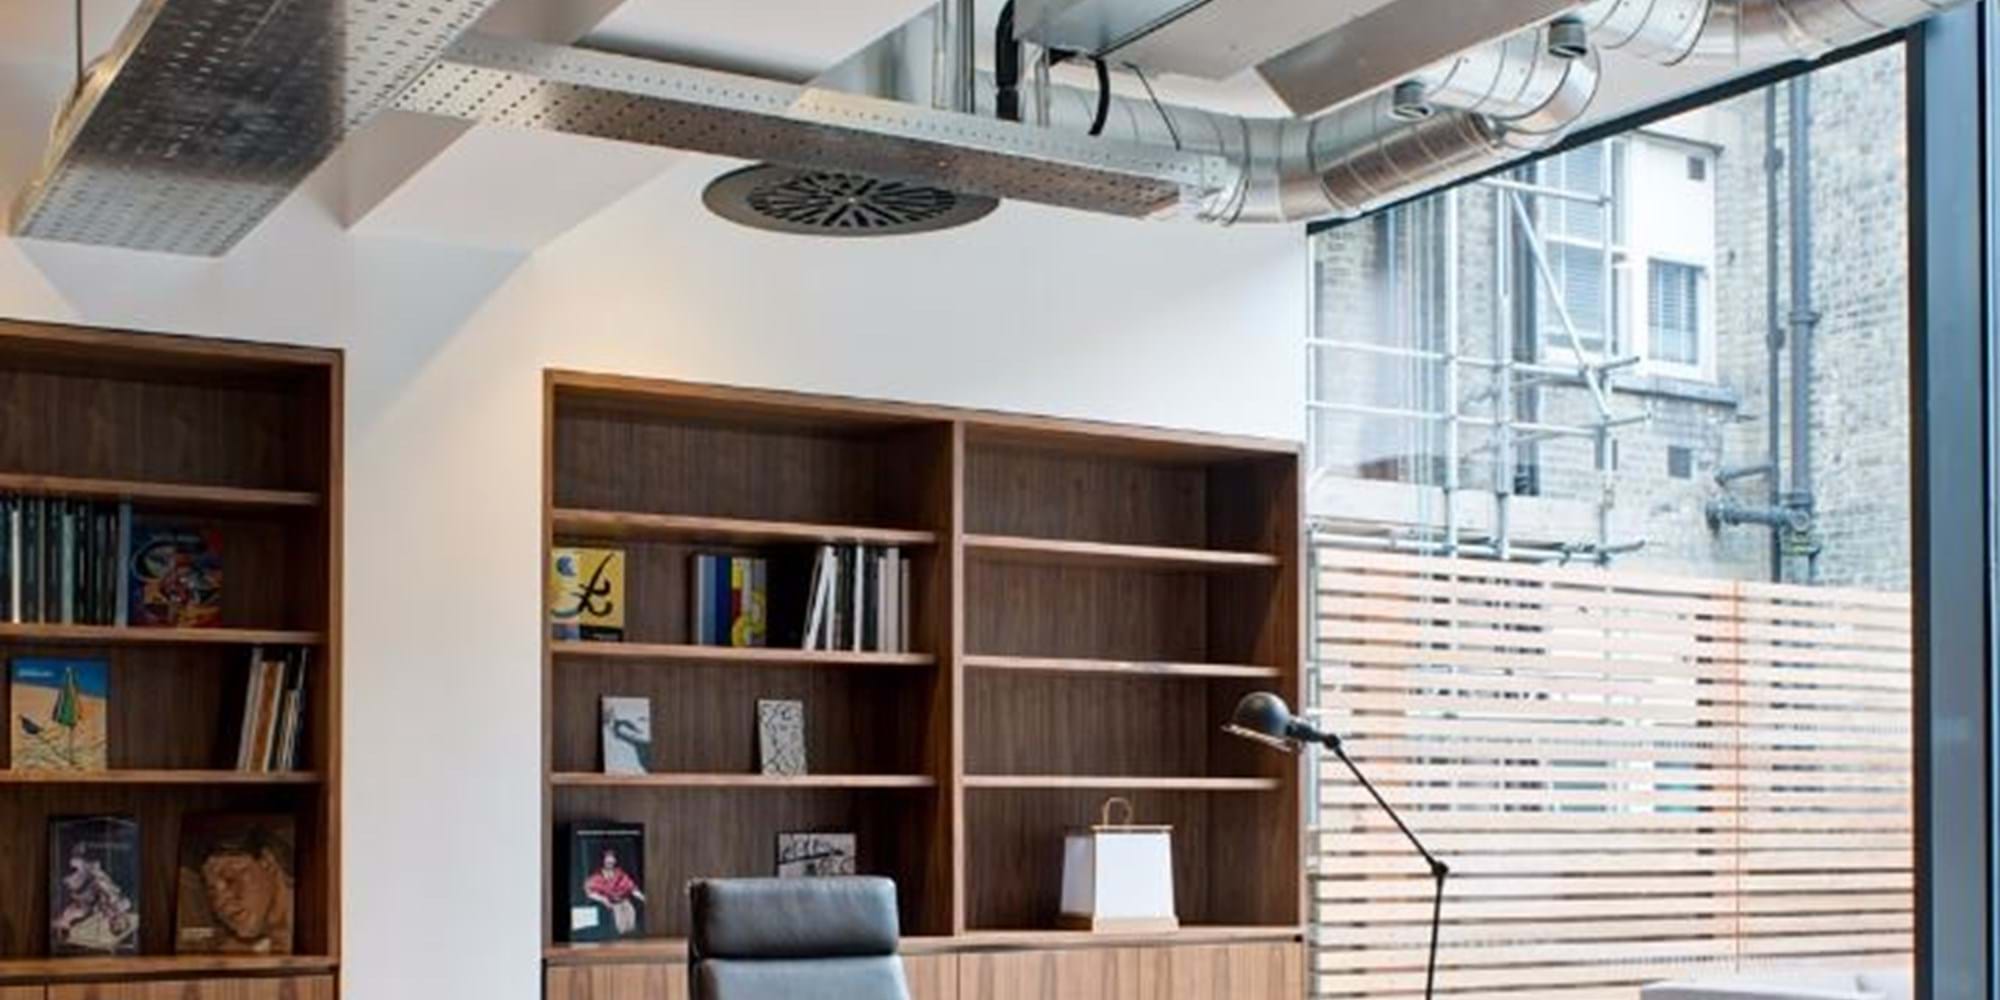 Modus Workspace office design, fit out and refurbishment - Craigewan - Graigewan 08 highres sRGB.jpg